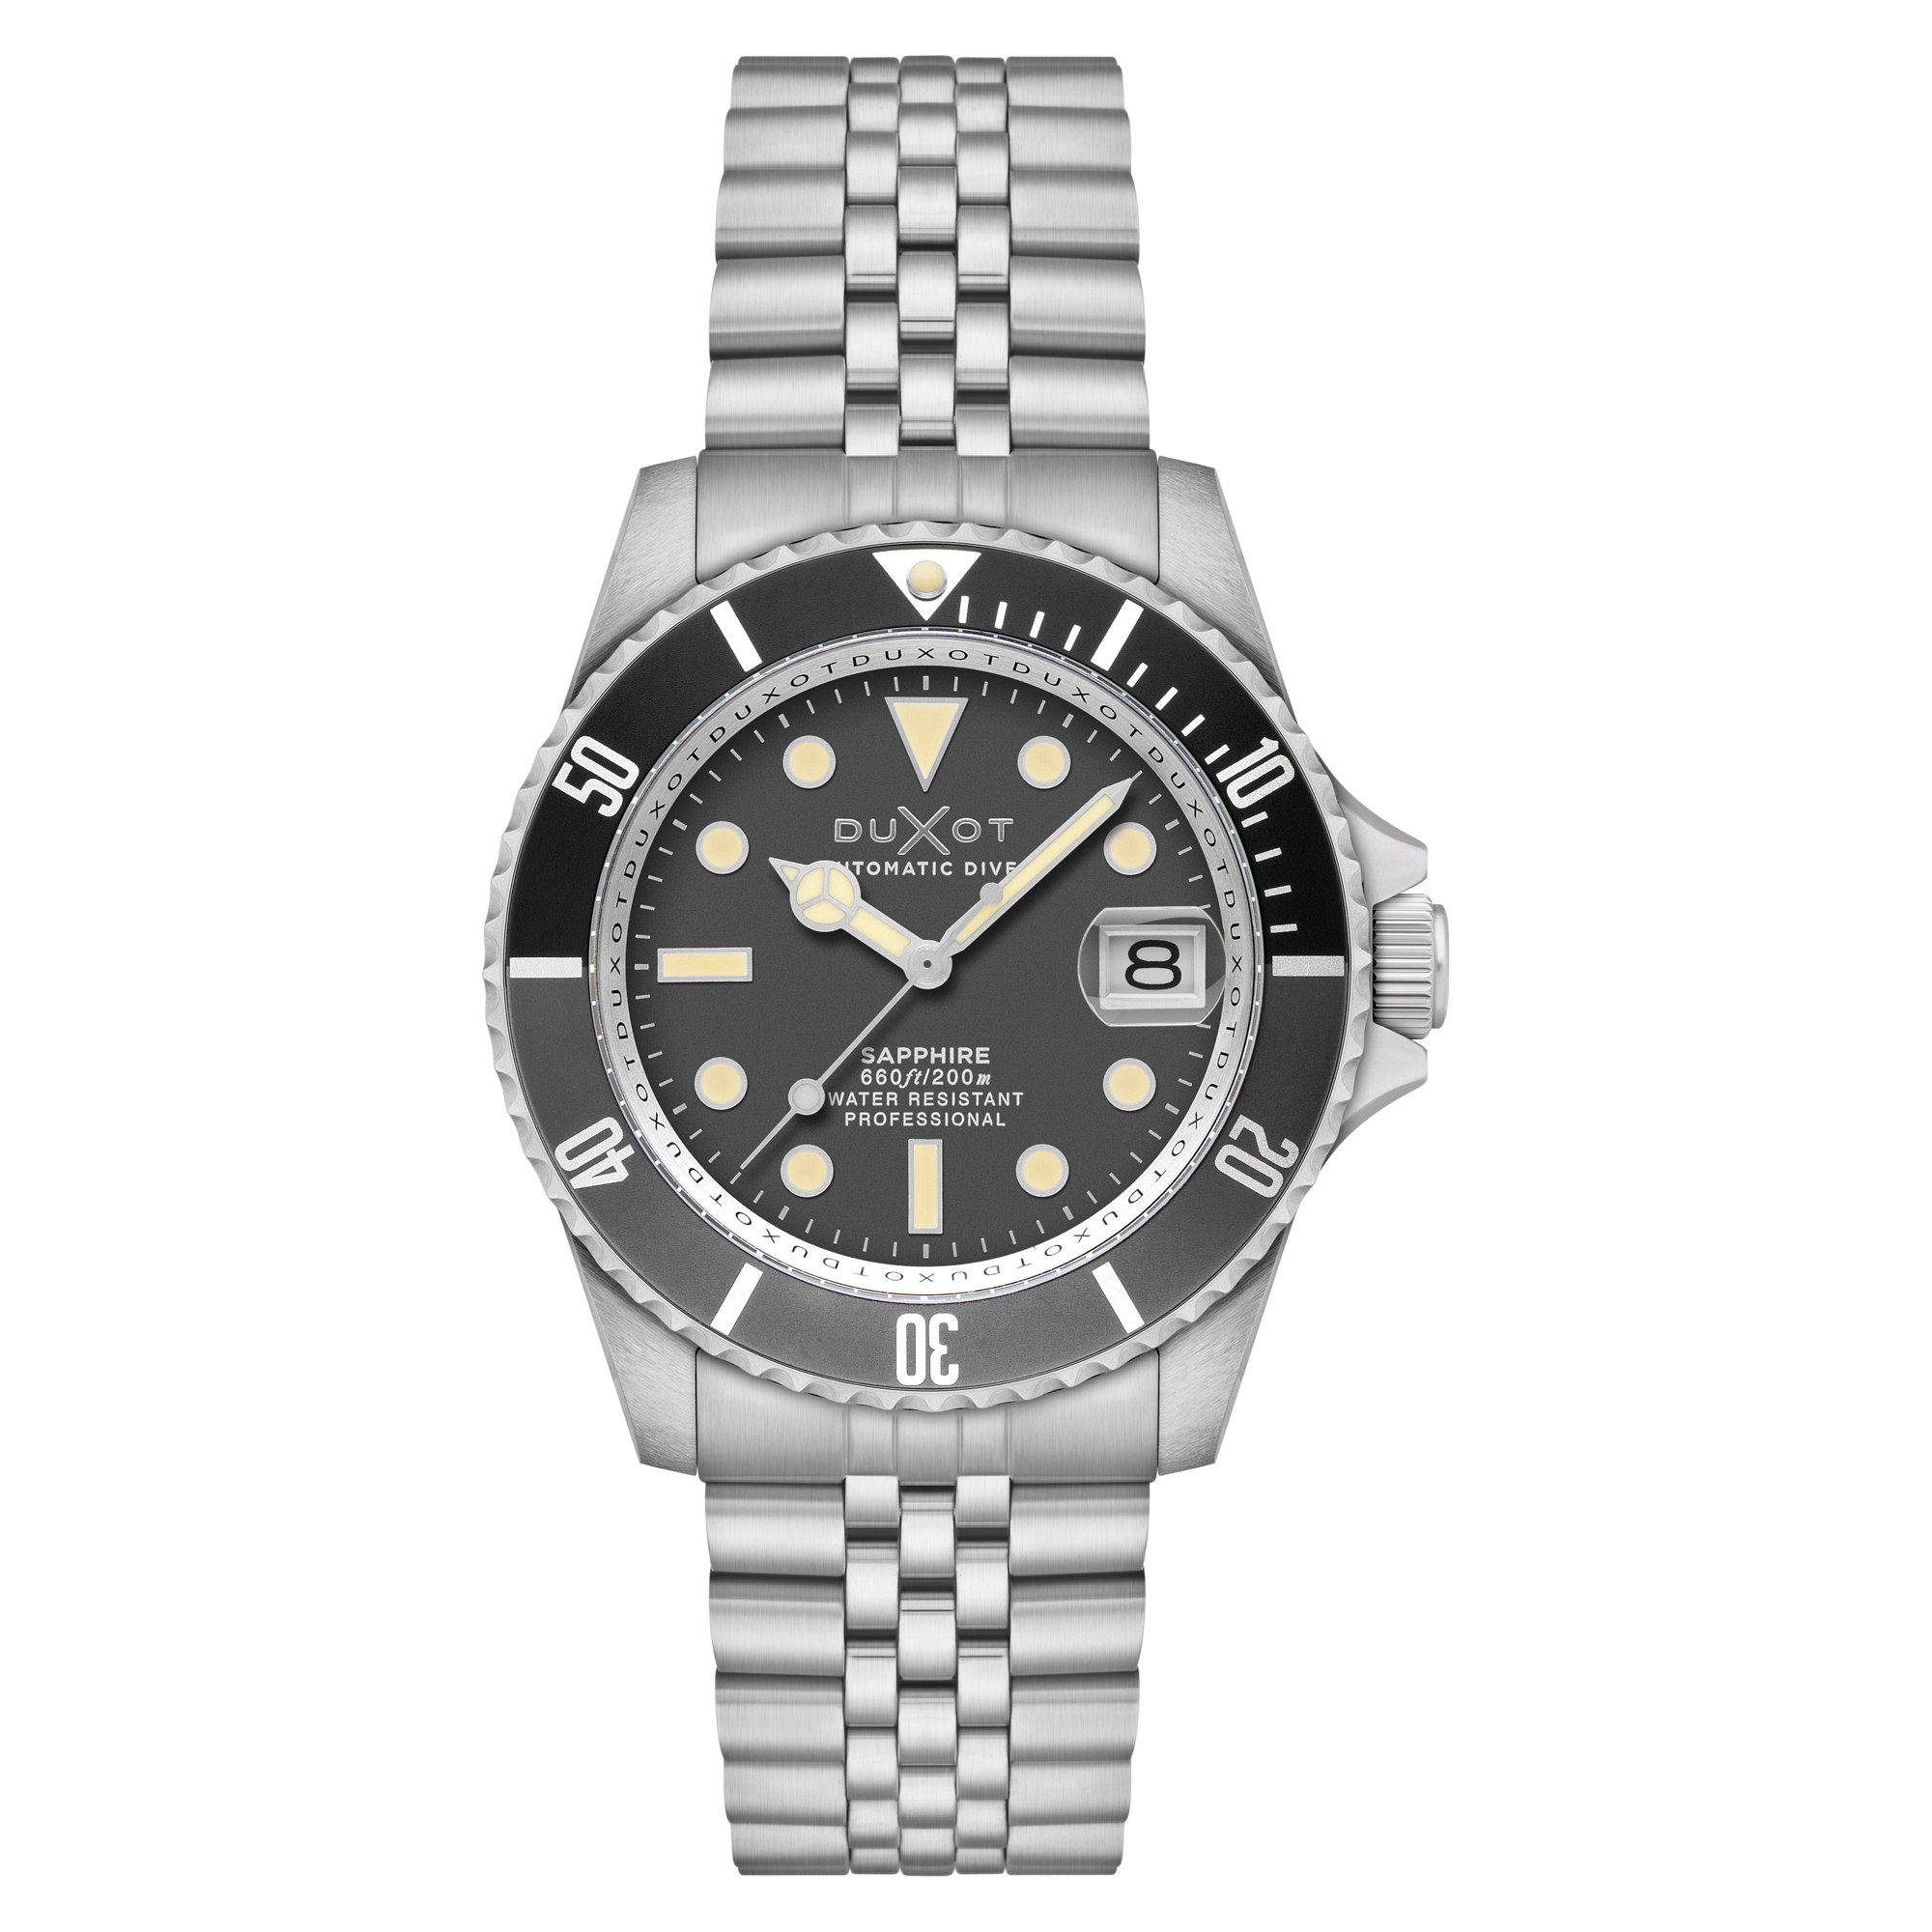 Duxot Duxot Atlantica Diver Automatic Charcoal Grey Men's Watch DX-2057-55